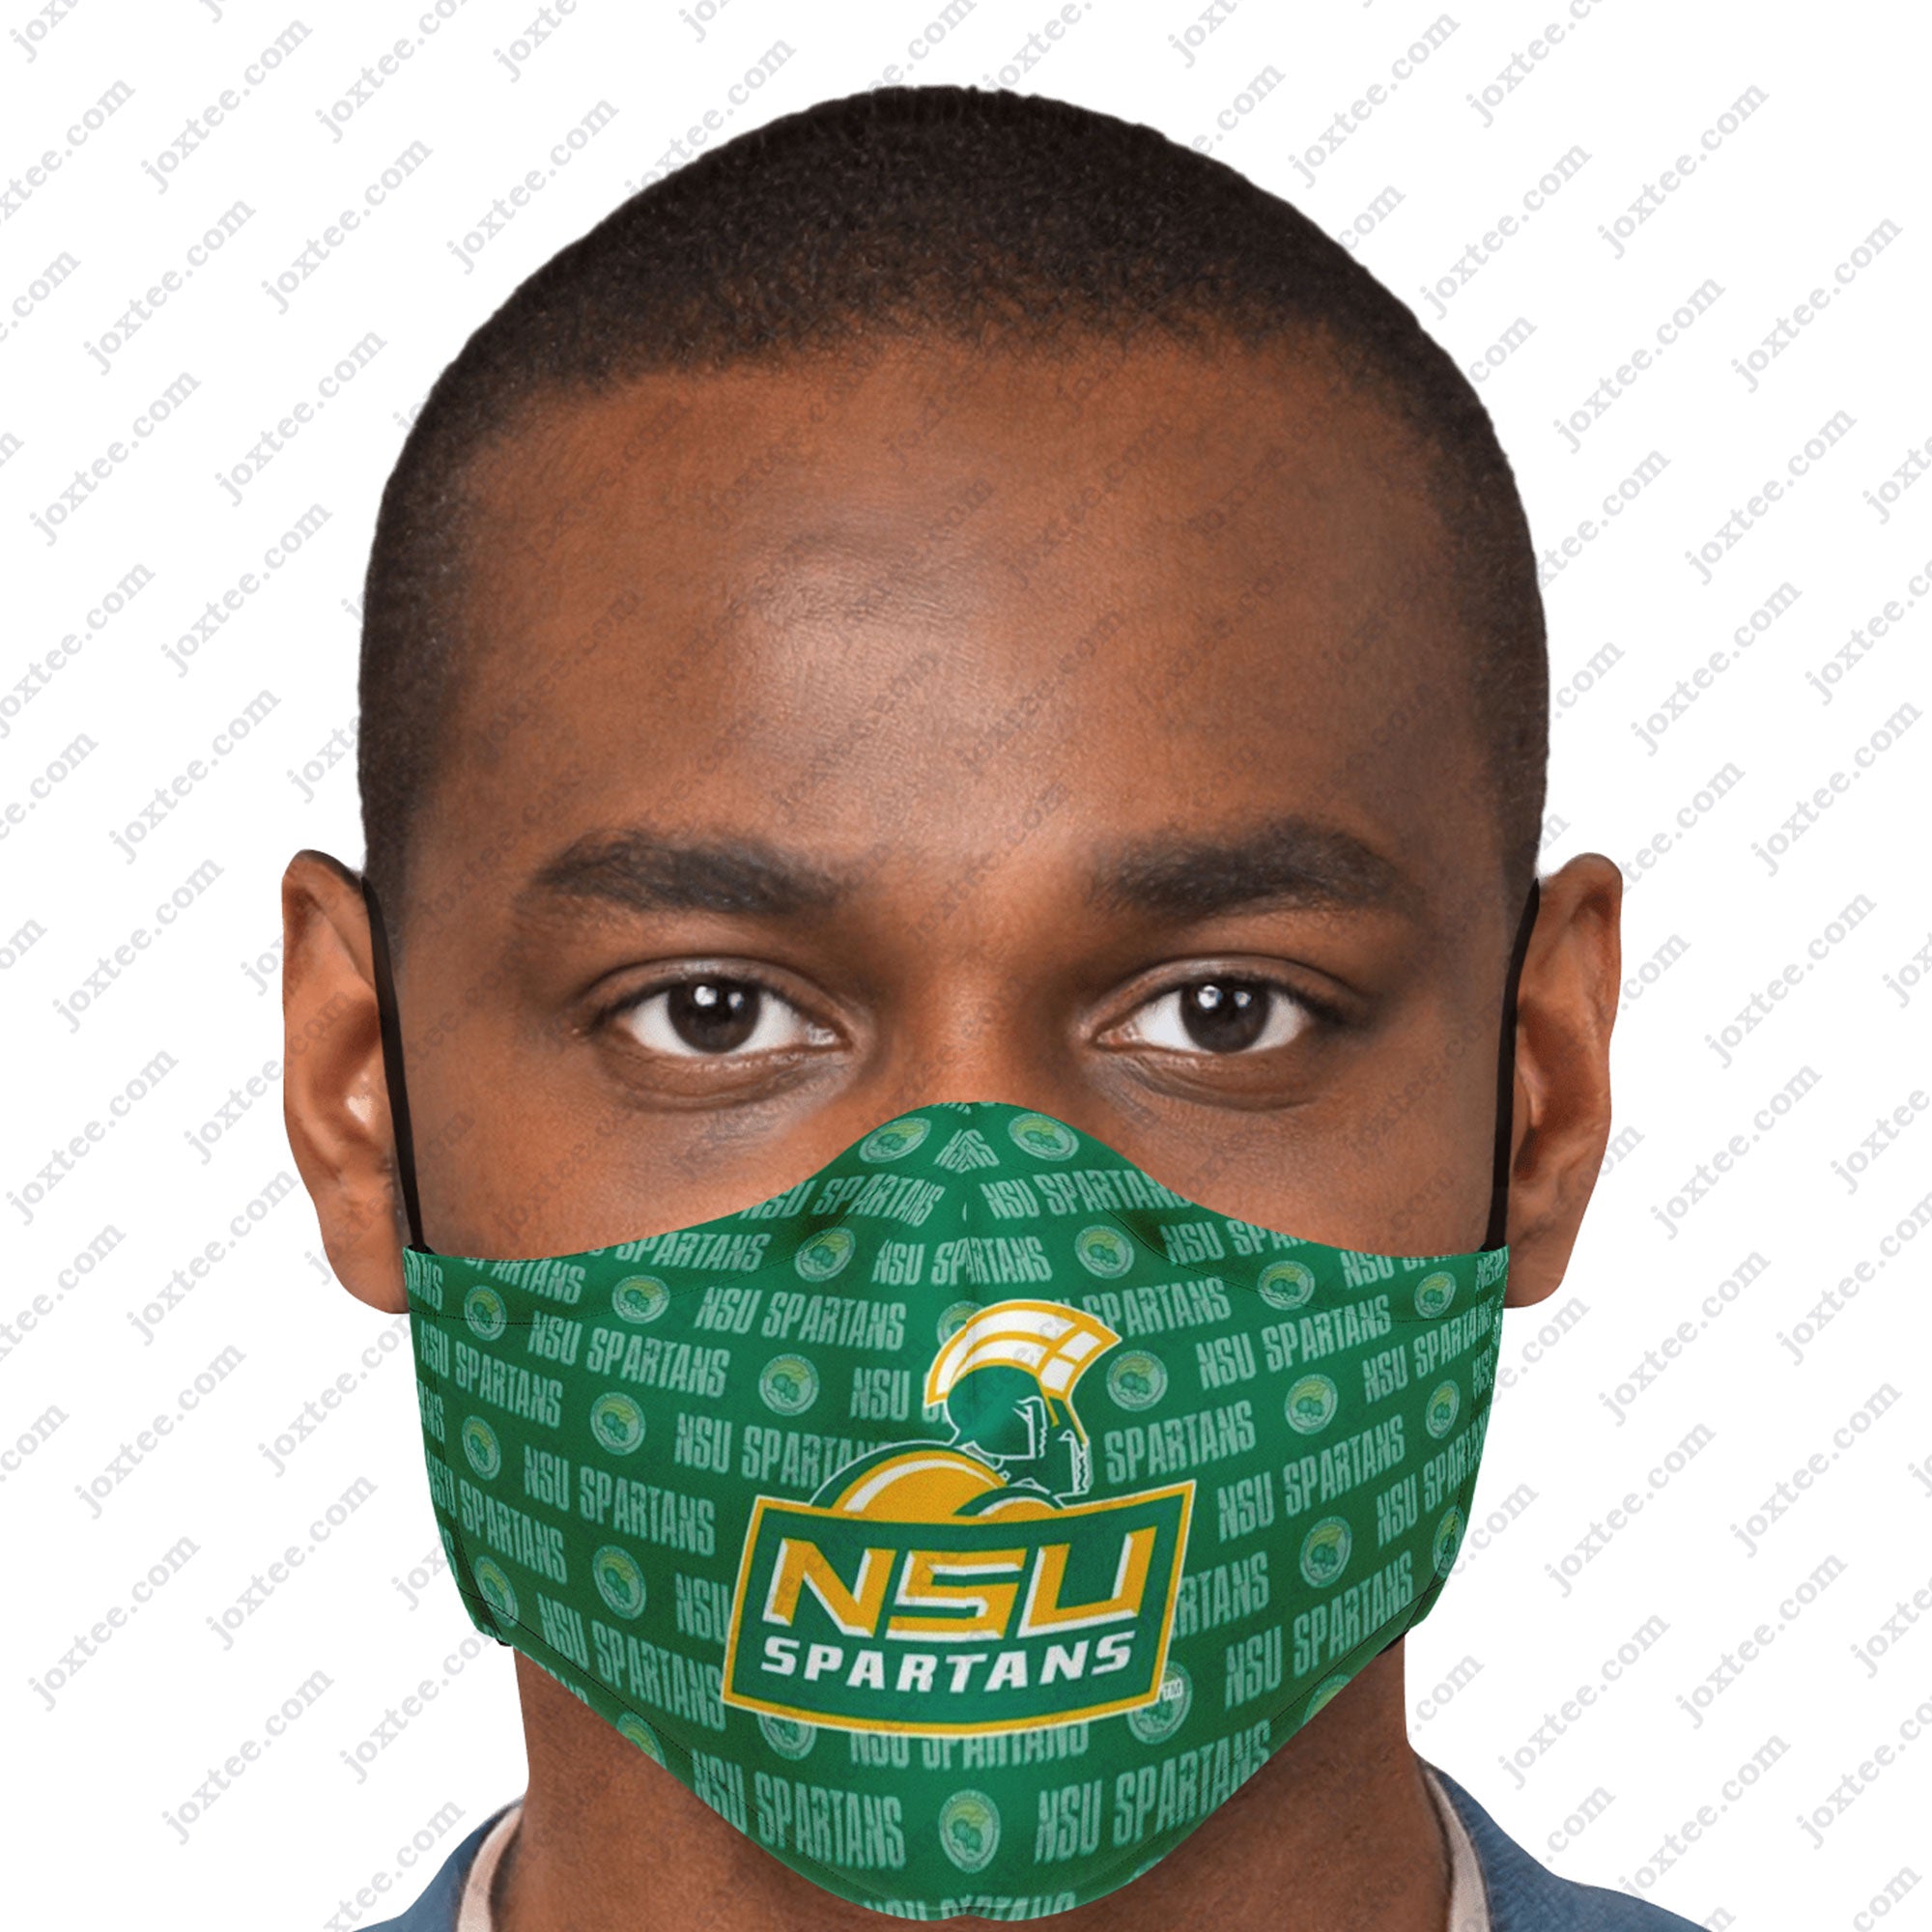 Nsu Spartans Fashion Mask 3D v1121